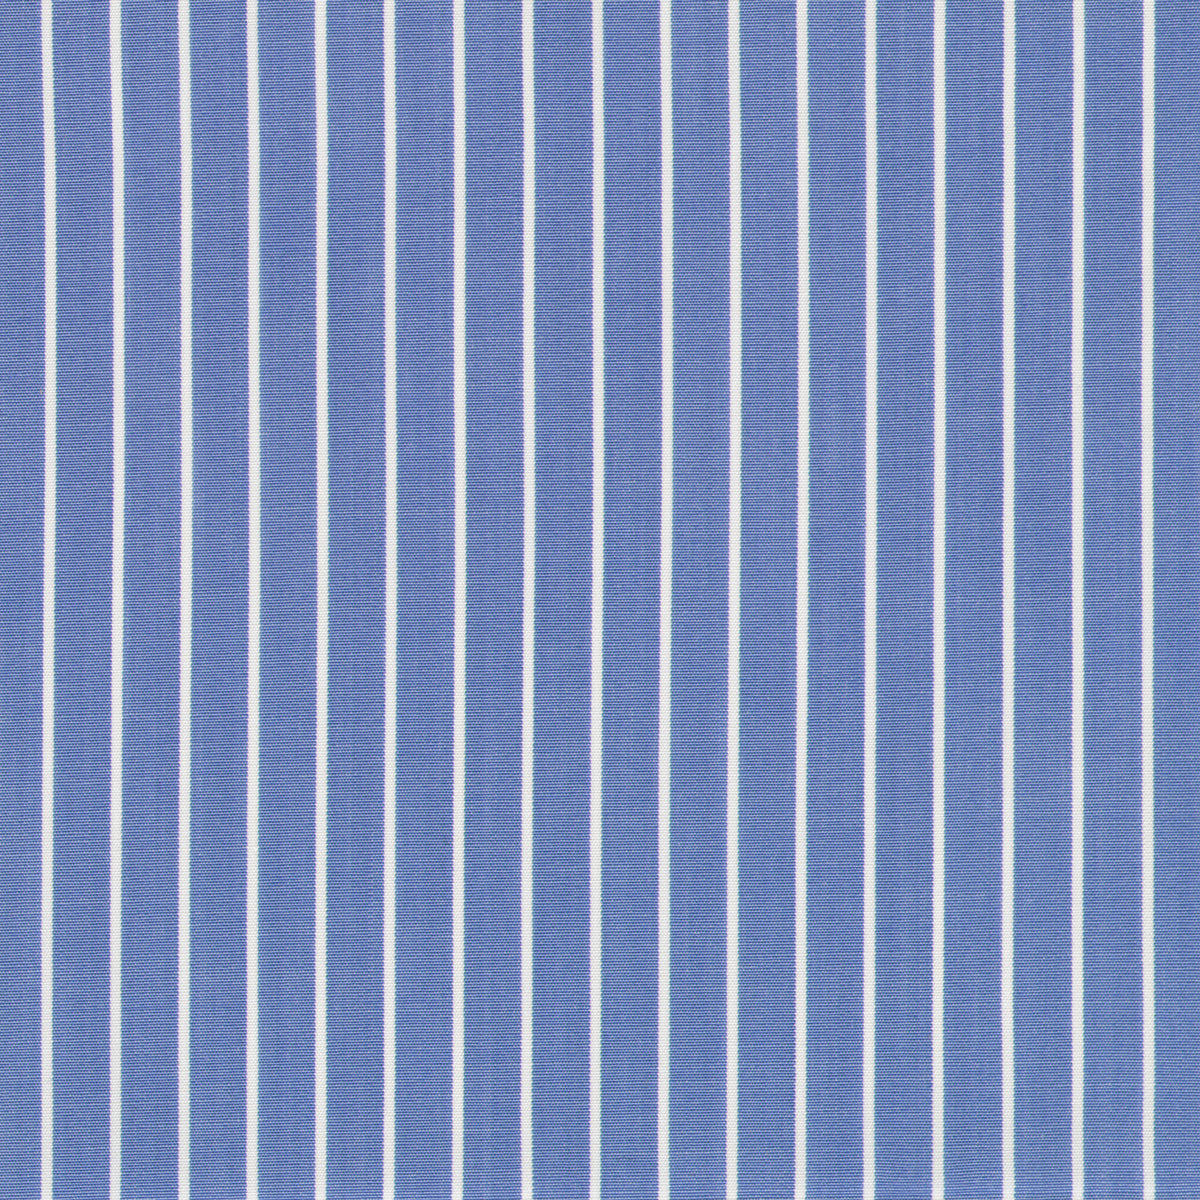 Made-to-Measure Shirt in Dutch Blue Wide Stripe Poplin